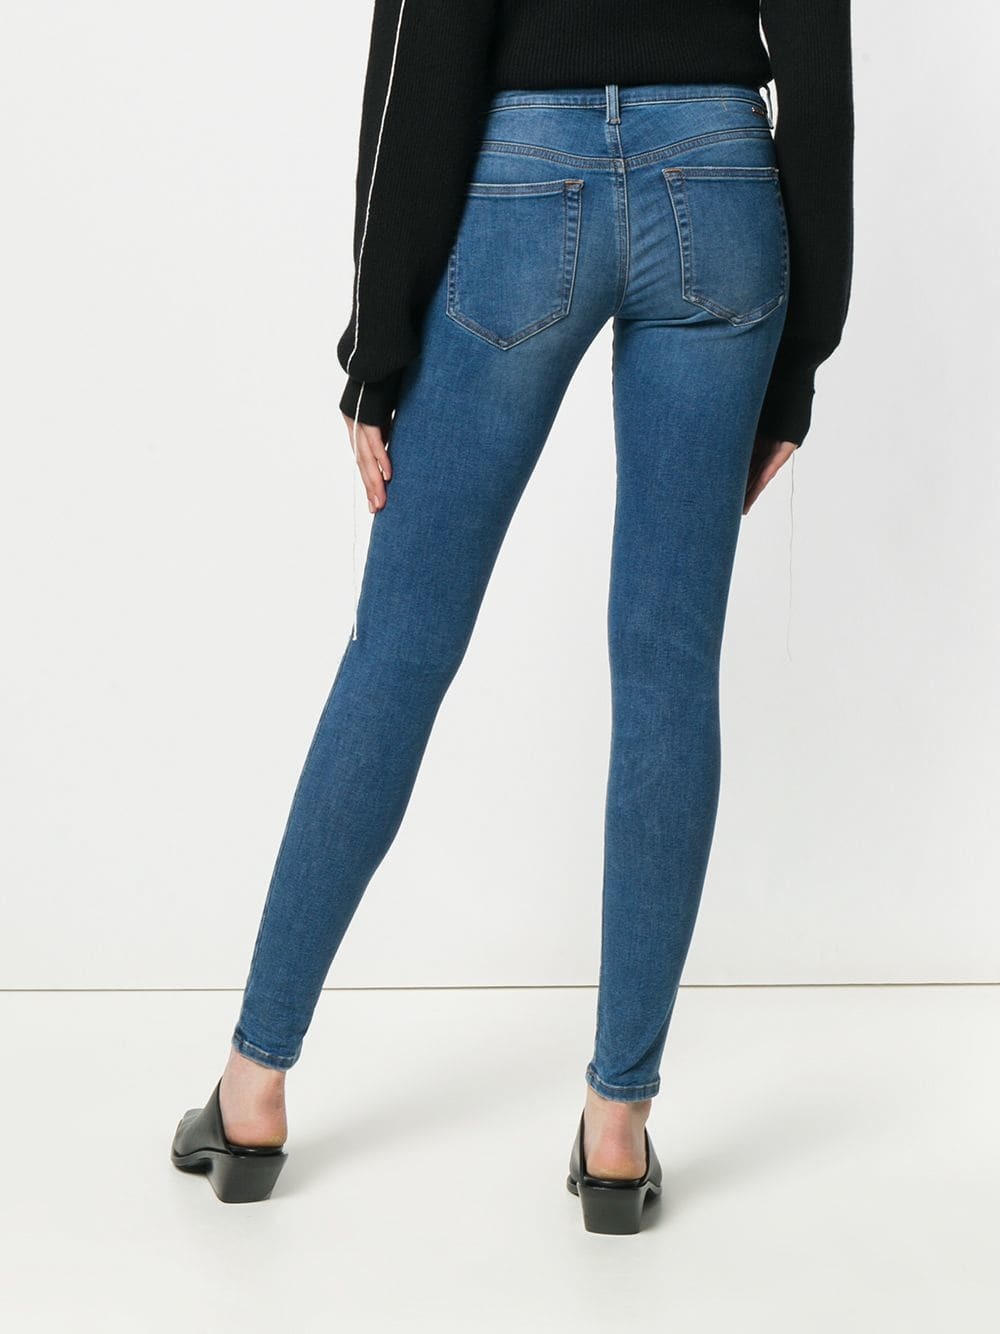 Diesel Slandy Low 084uf Skinny Jeans, $82 | farfetch.com | Lookastic